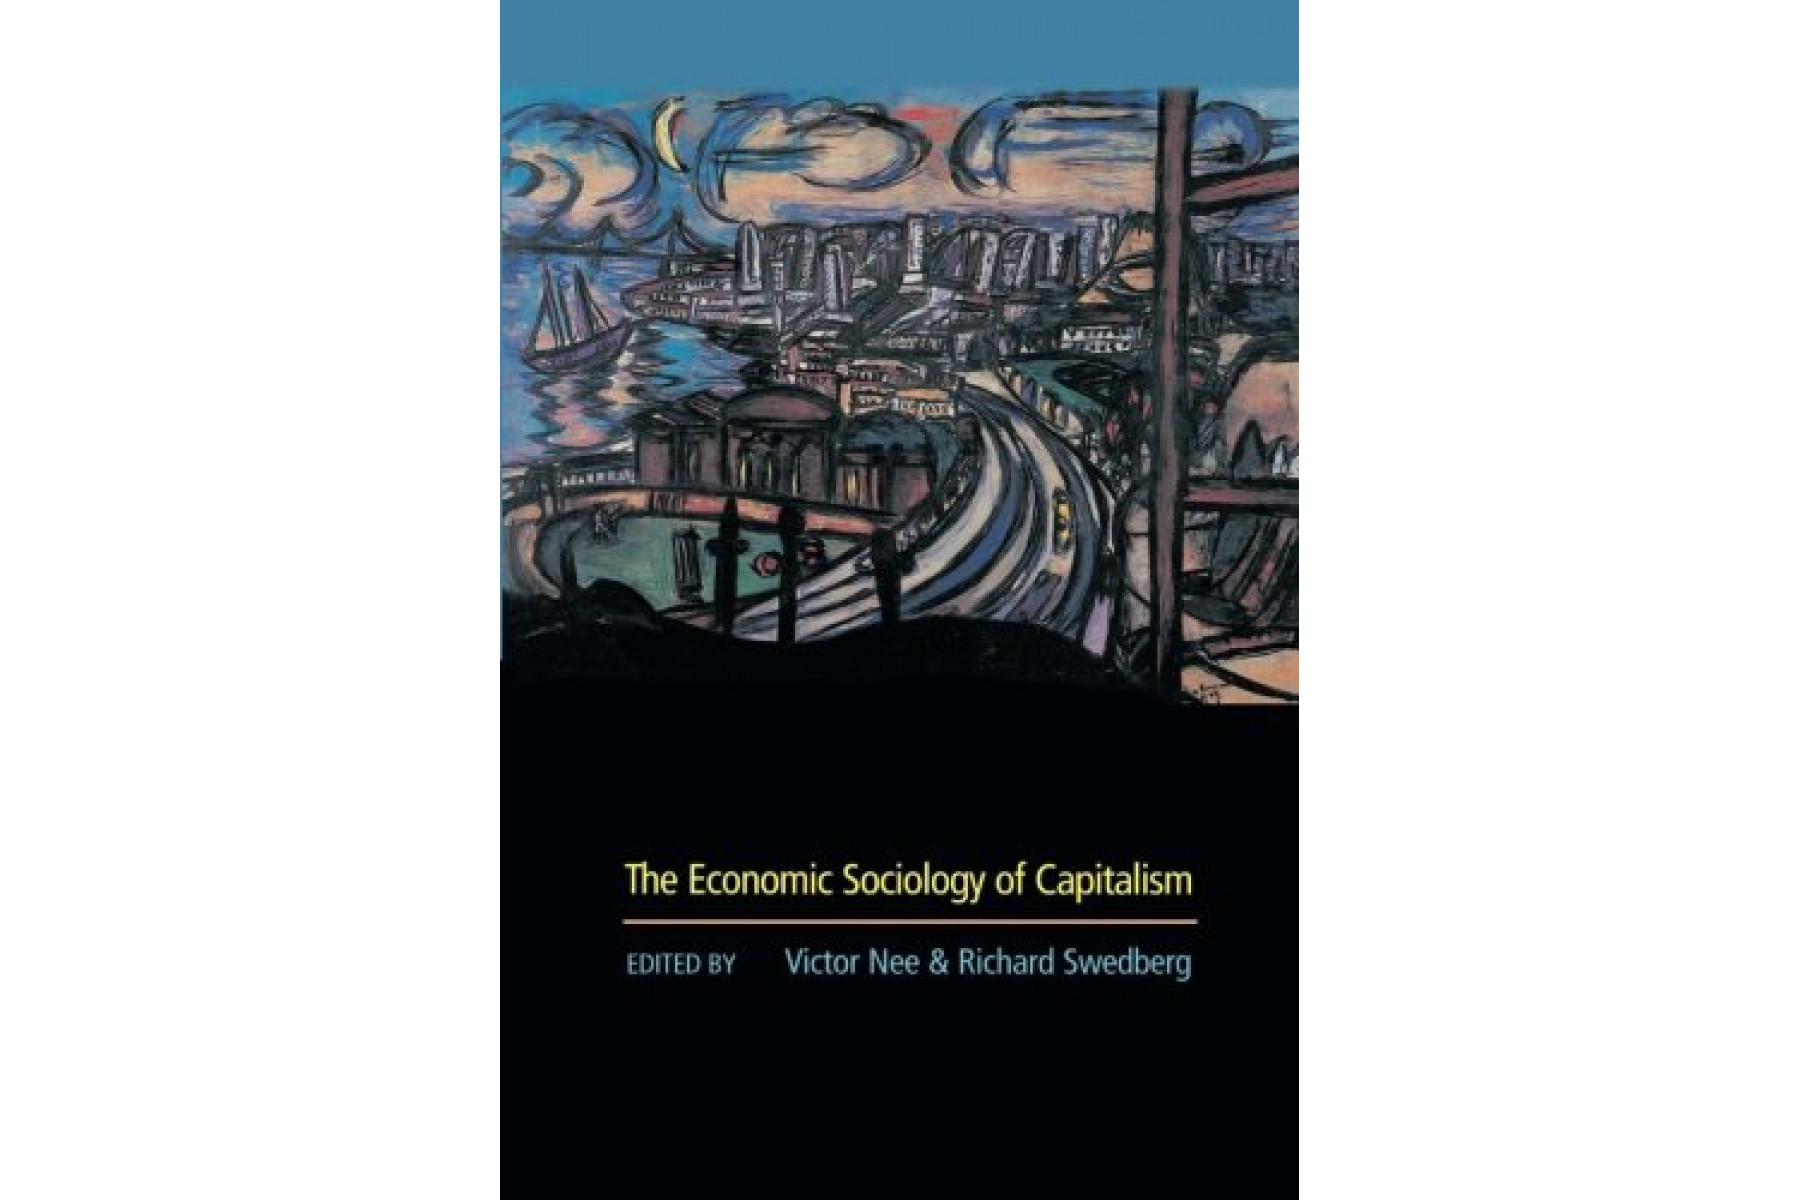 The Economic Sociology of Capitalism